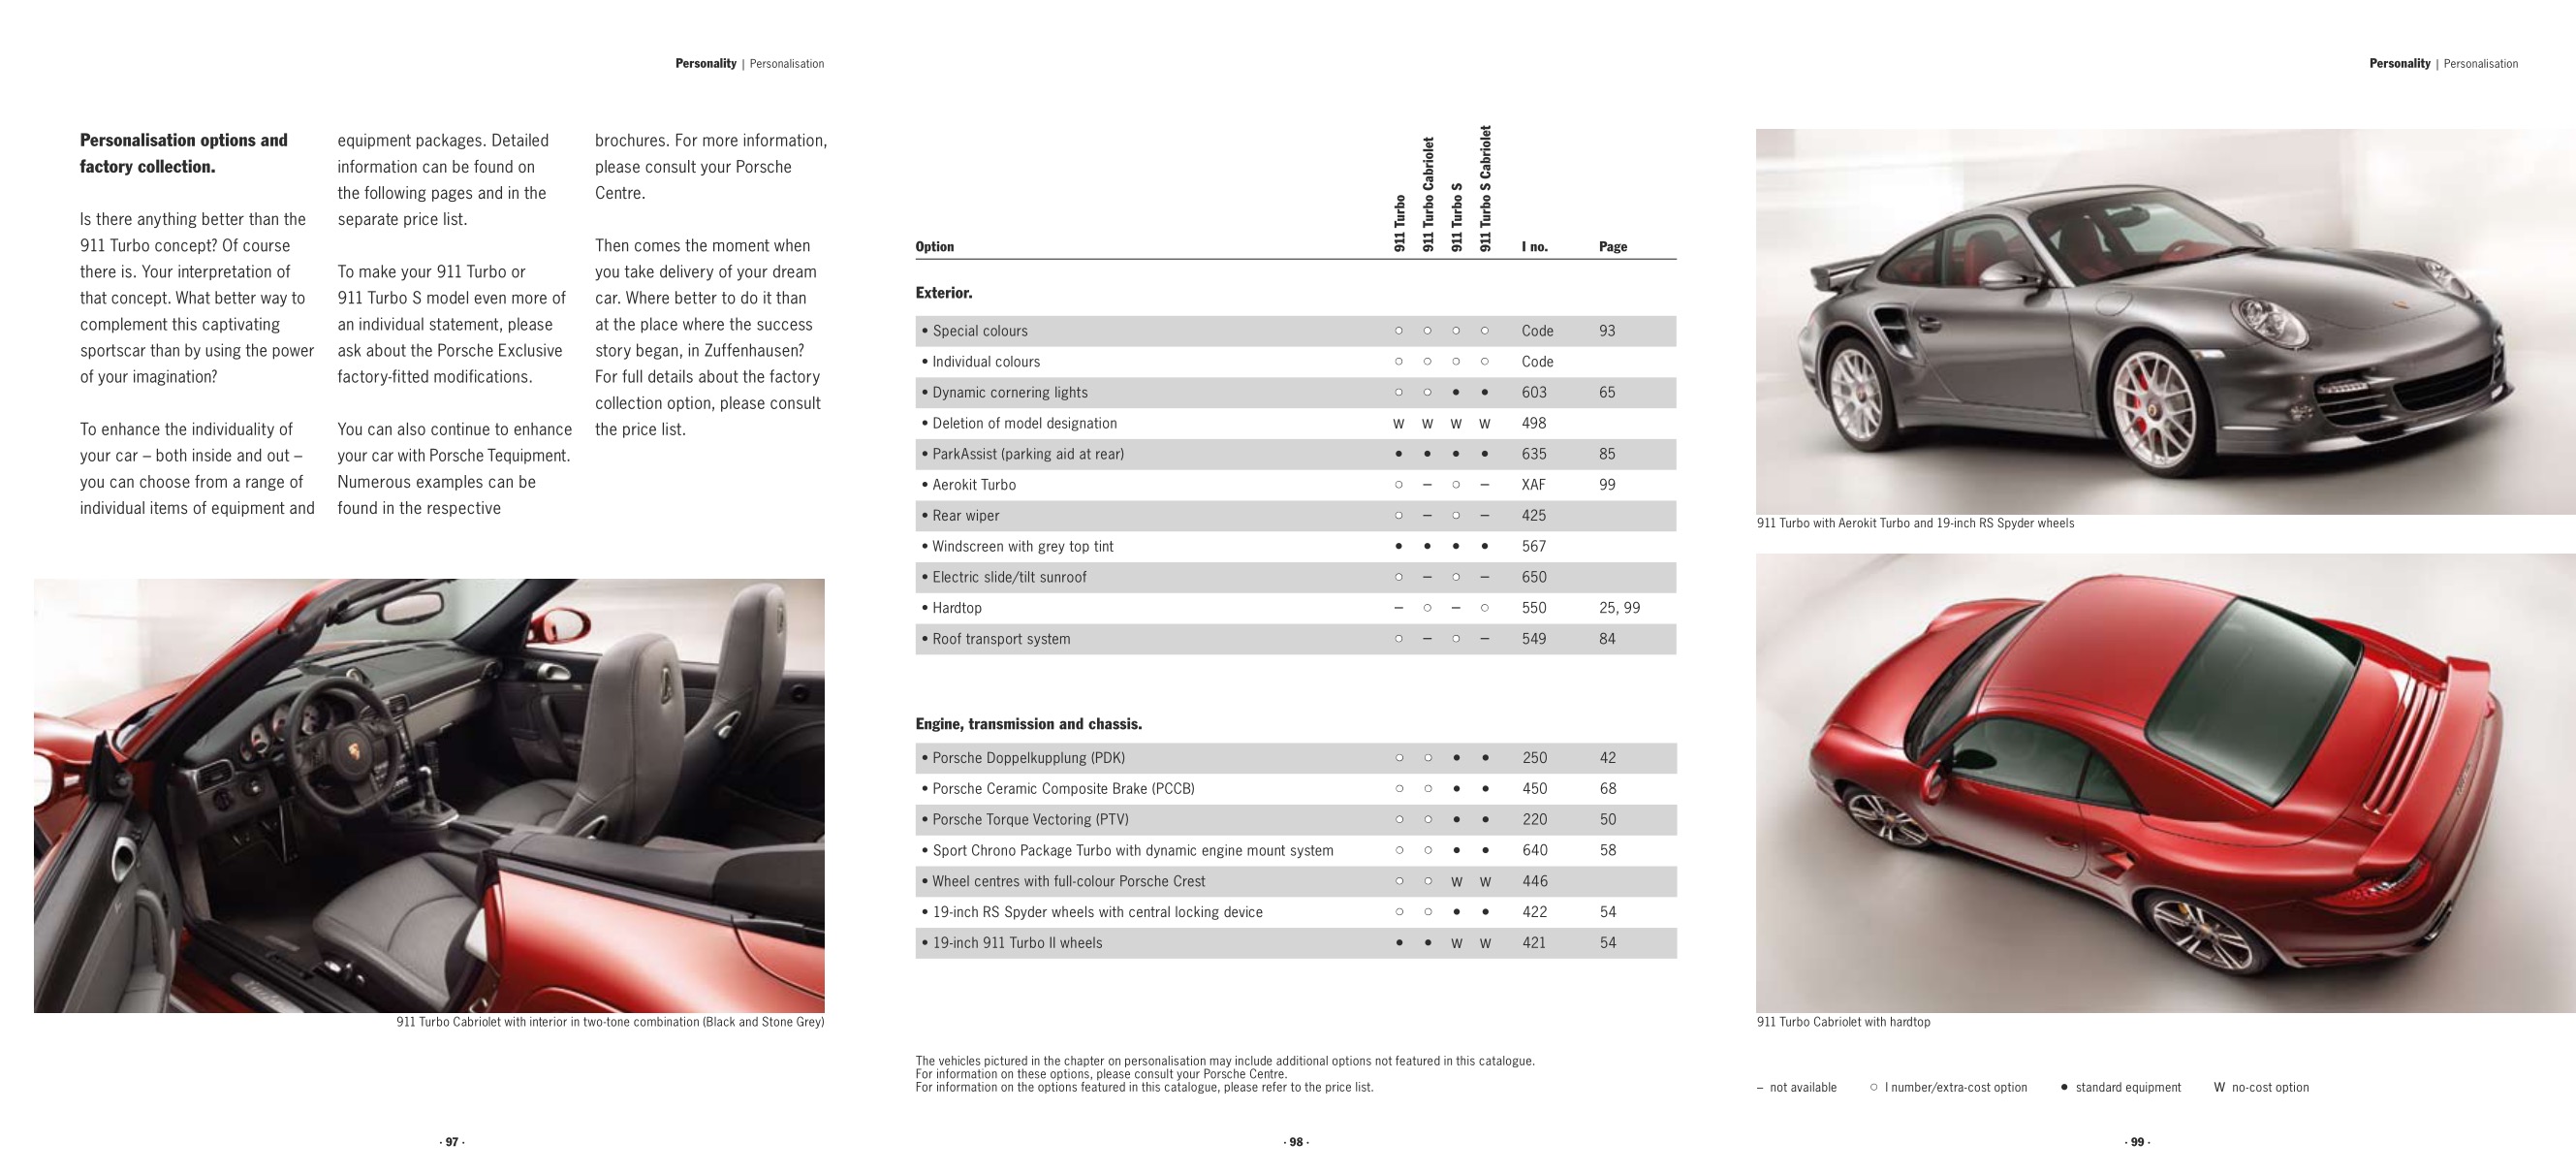 2010 Porsche 911 Turbo Brochure Page 4